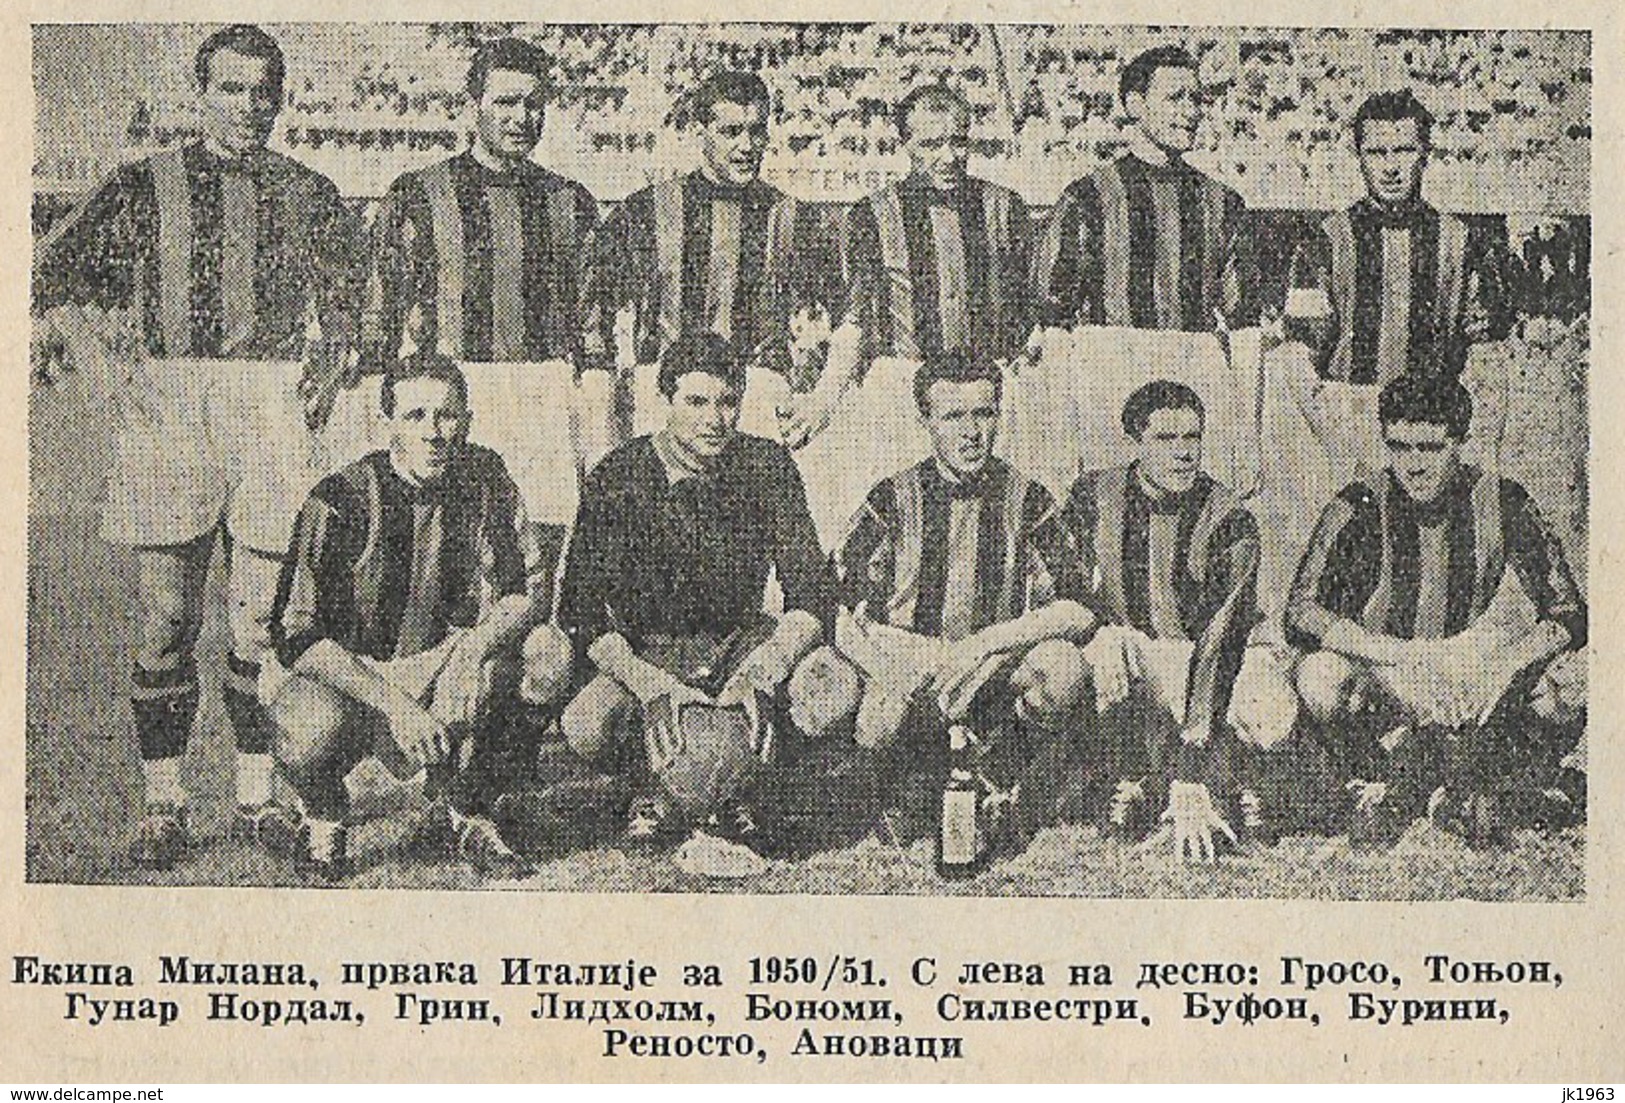 SERBIA-YUGOSLAVIA, FOOTBALL, ANNUAL ILUSTRATED PUBLICATION, 1951